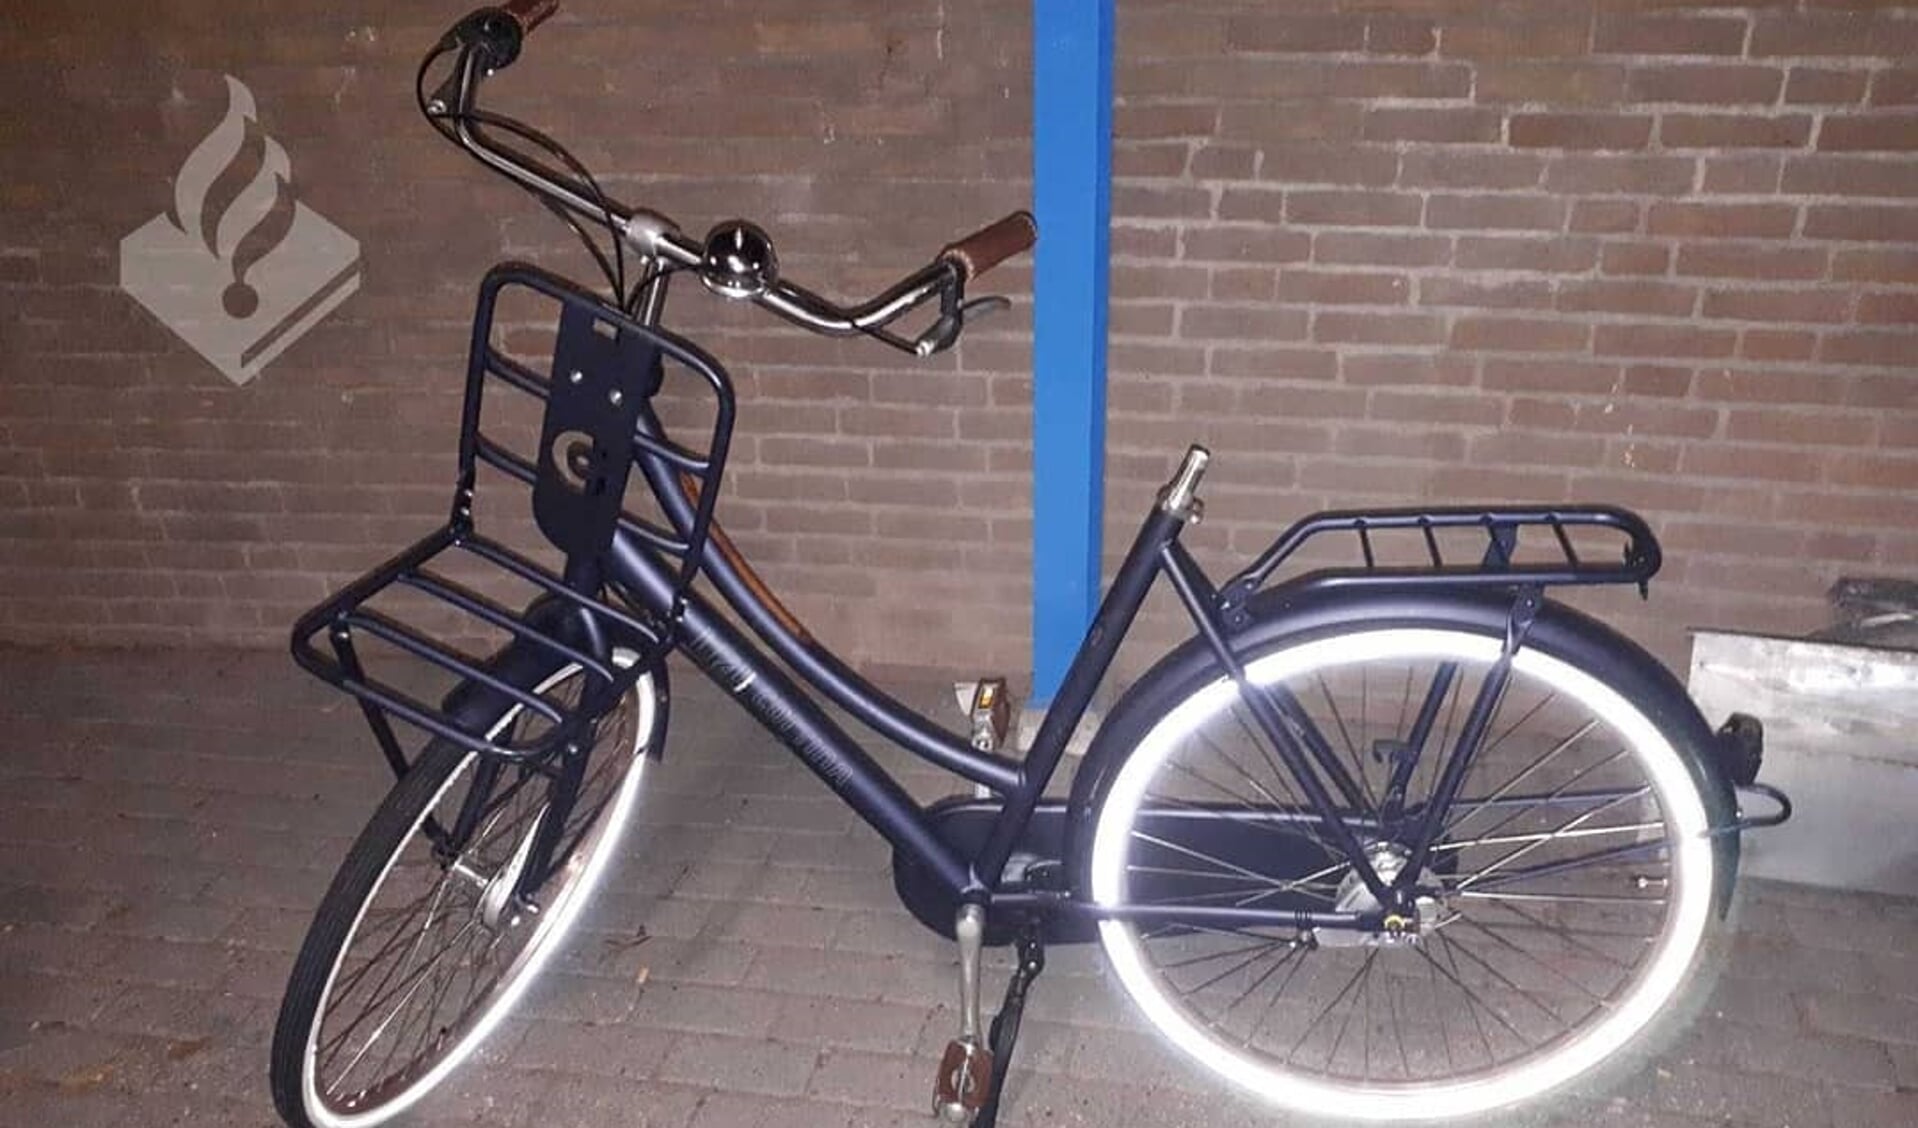 De fiets. (Foto: Facebook politie Oss)